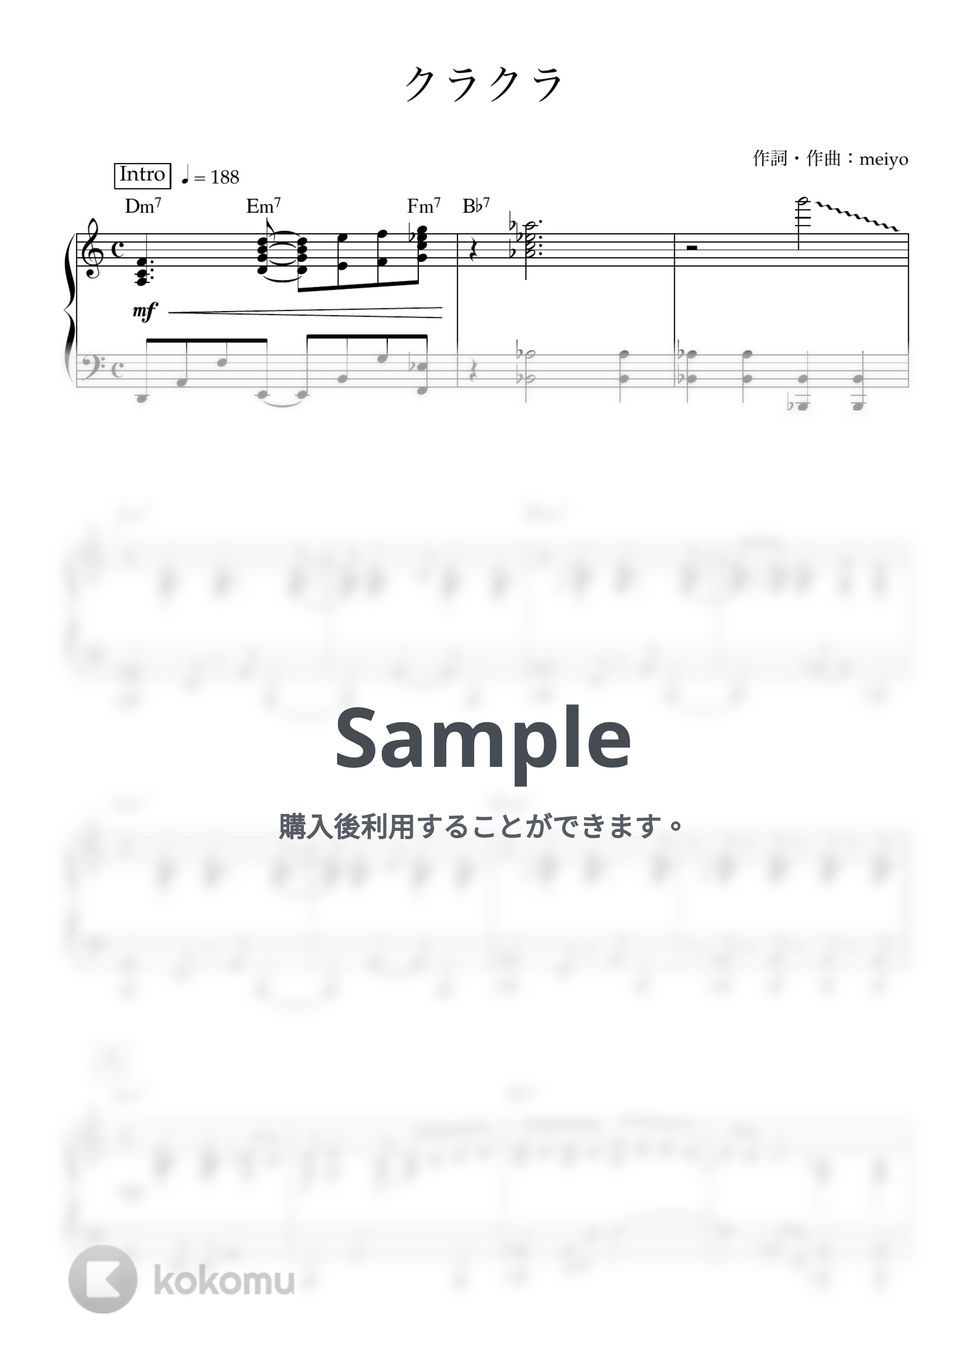 Ado - クラクラ (ピアノ,Ado) by ヒット